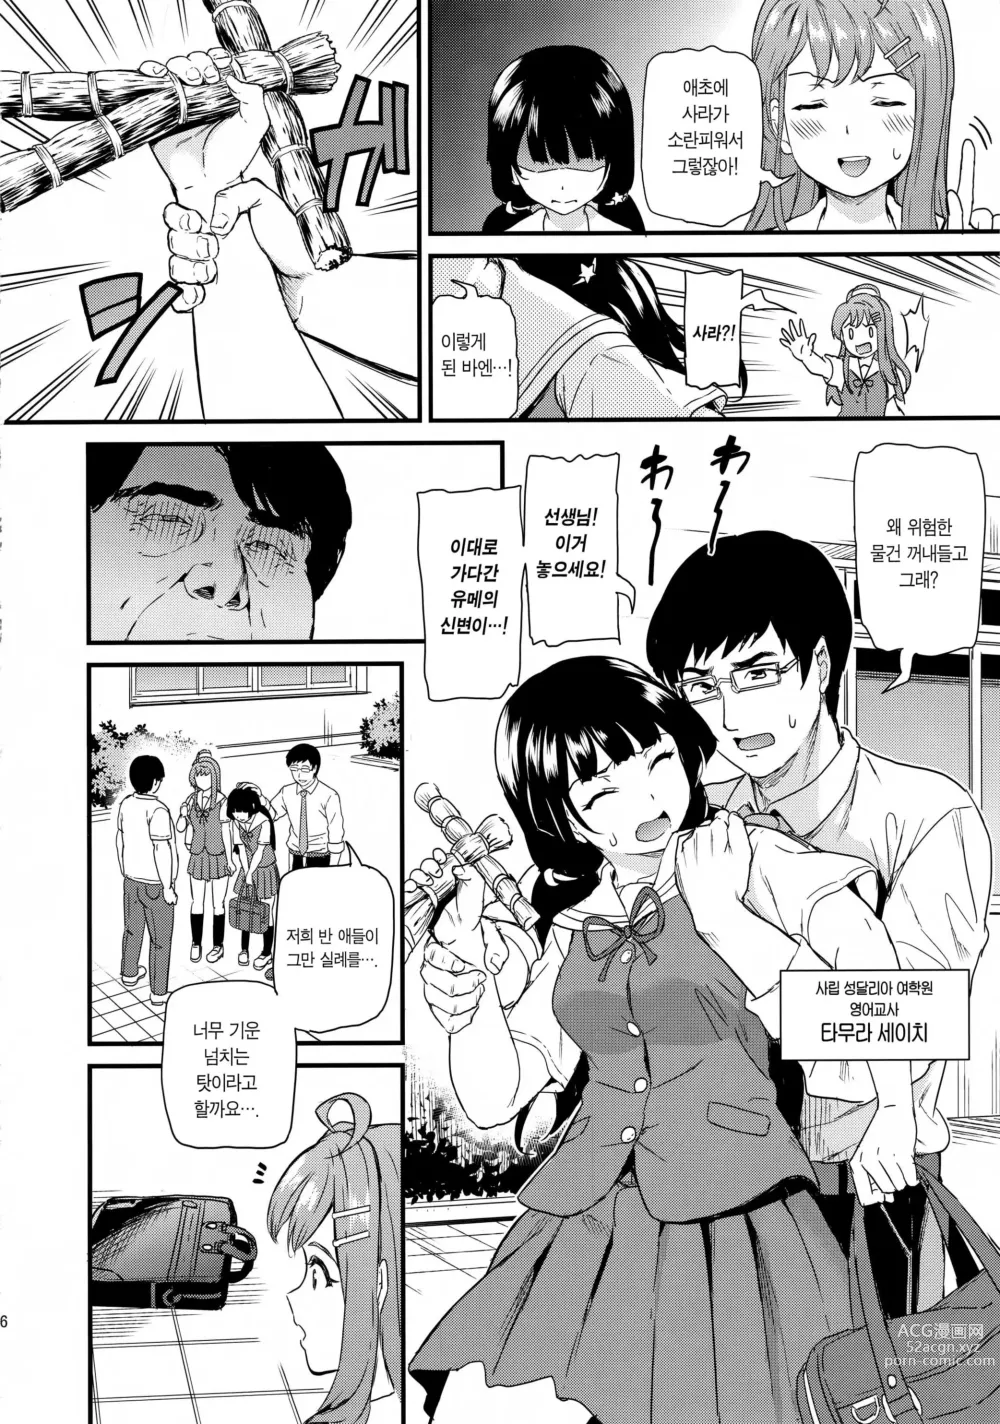 Page 6 of manga 지지 강요